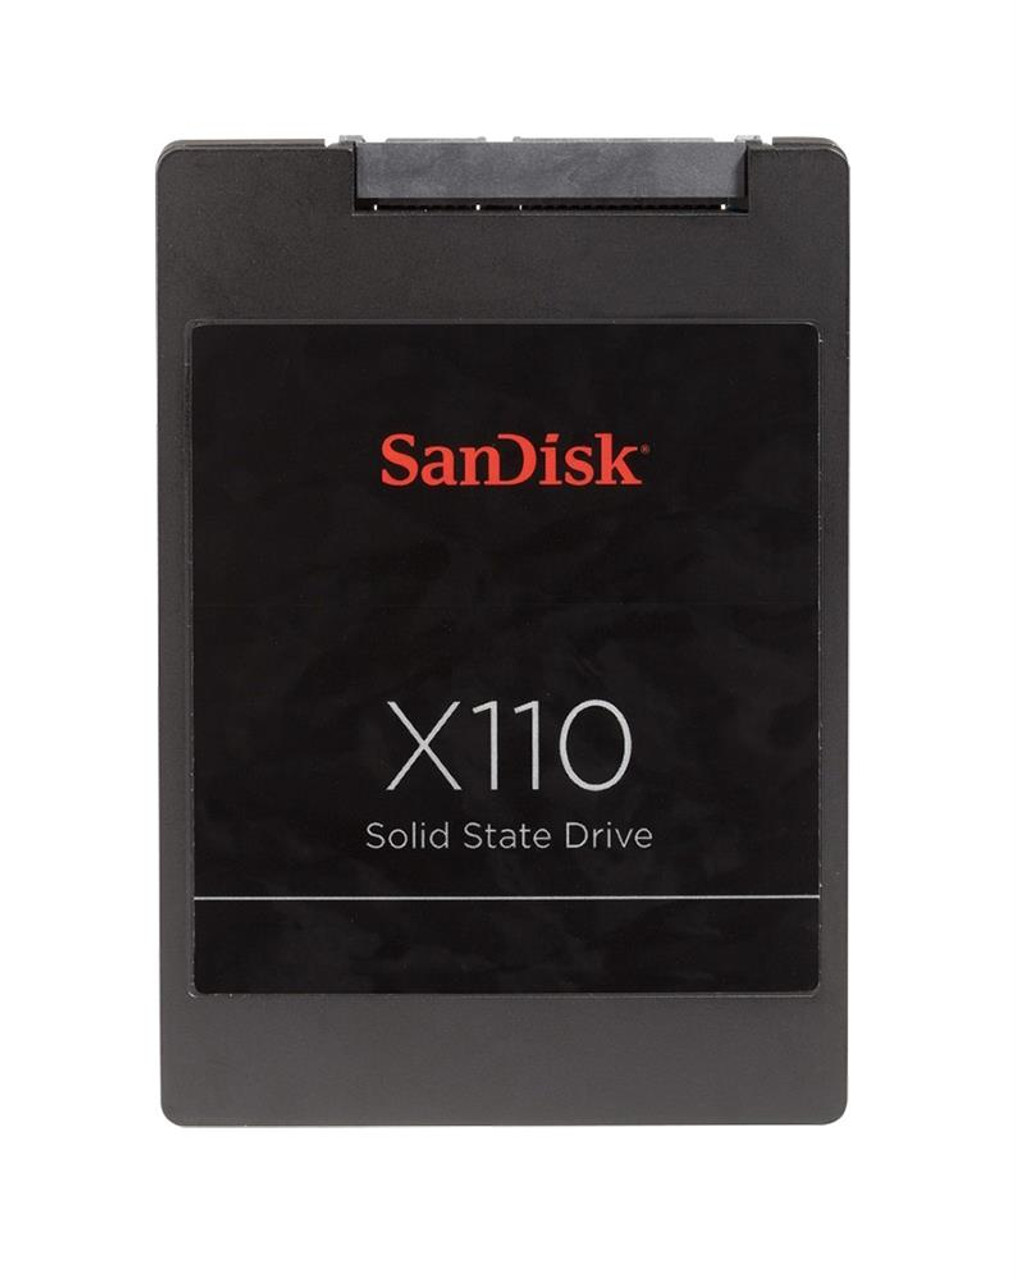 SD6SB1M-032G-1022I SanDisk X110 32GB MLC SATA 6Gbps 2.5-inch Internal Solid State Drive (SSD)